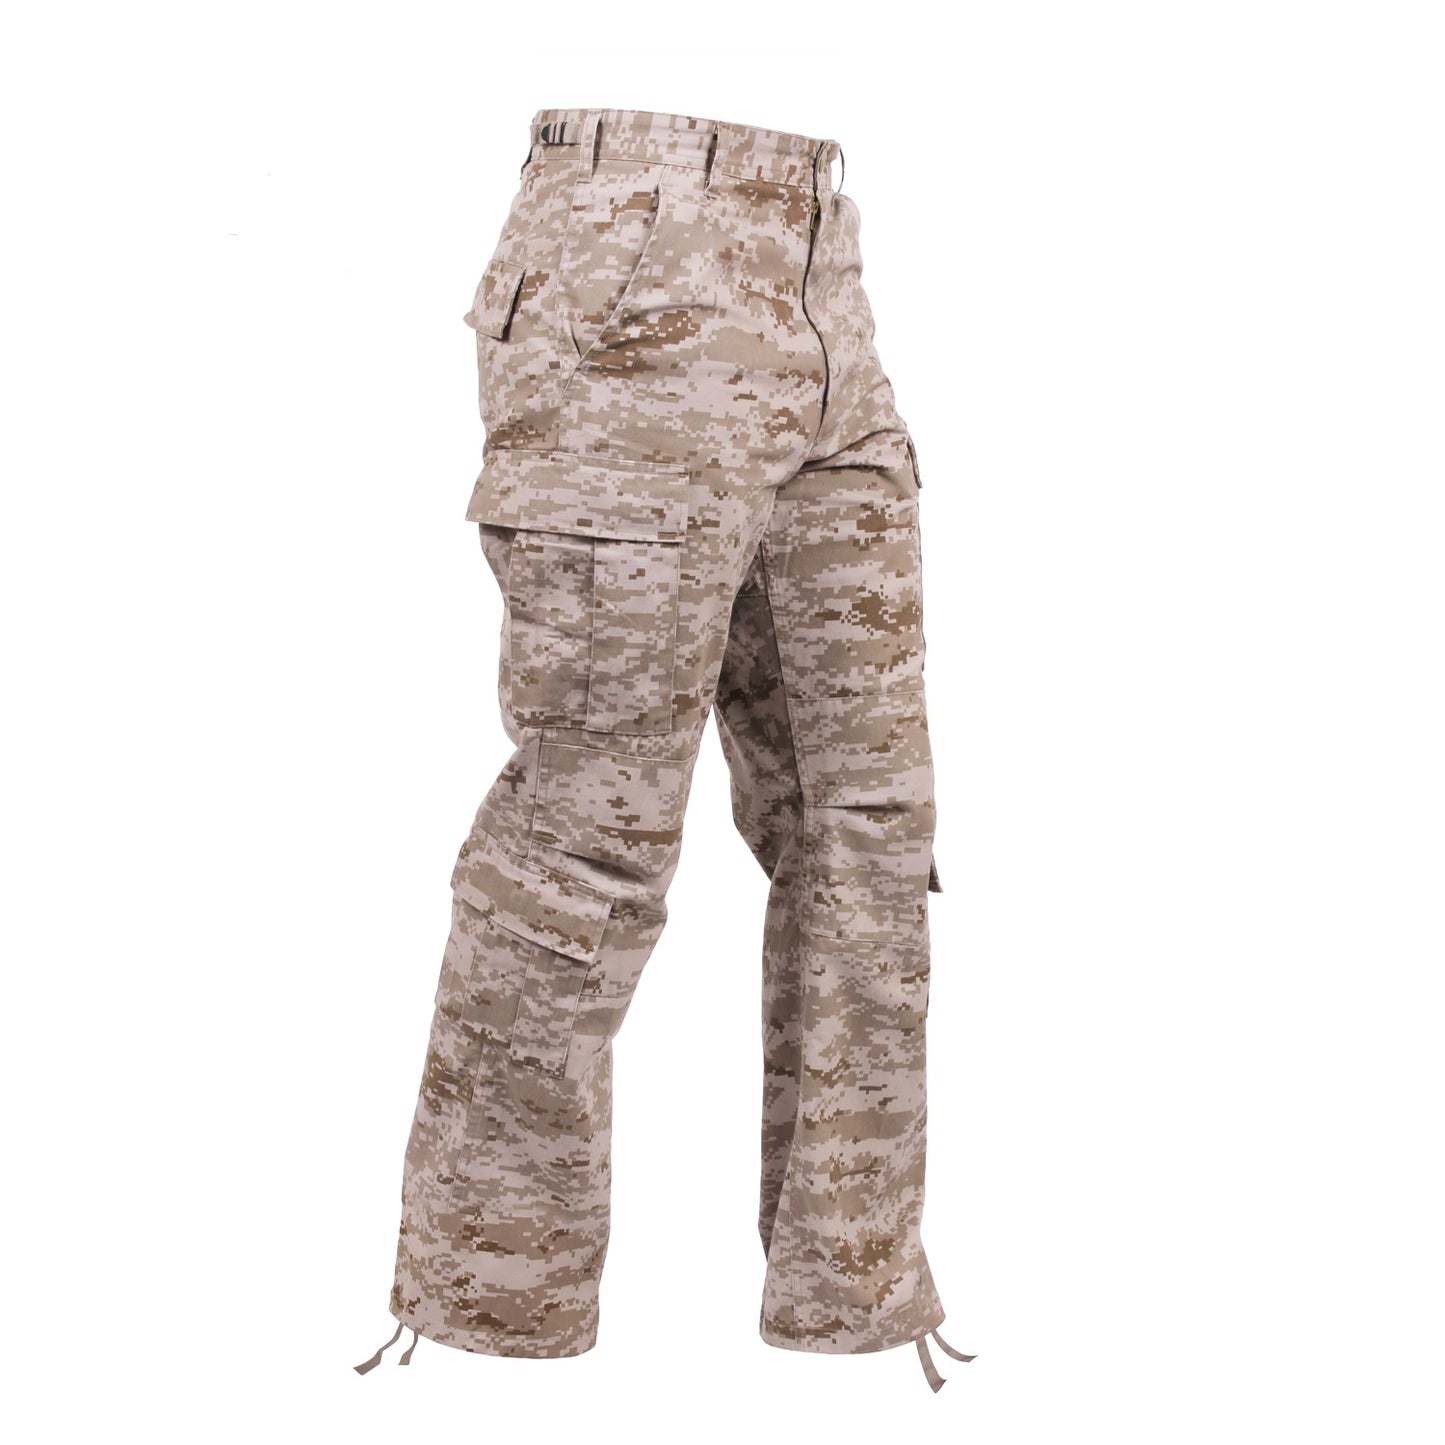 Rothco Men's Vintage Paratrooper Fatigues - Camo Cargo Pants